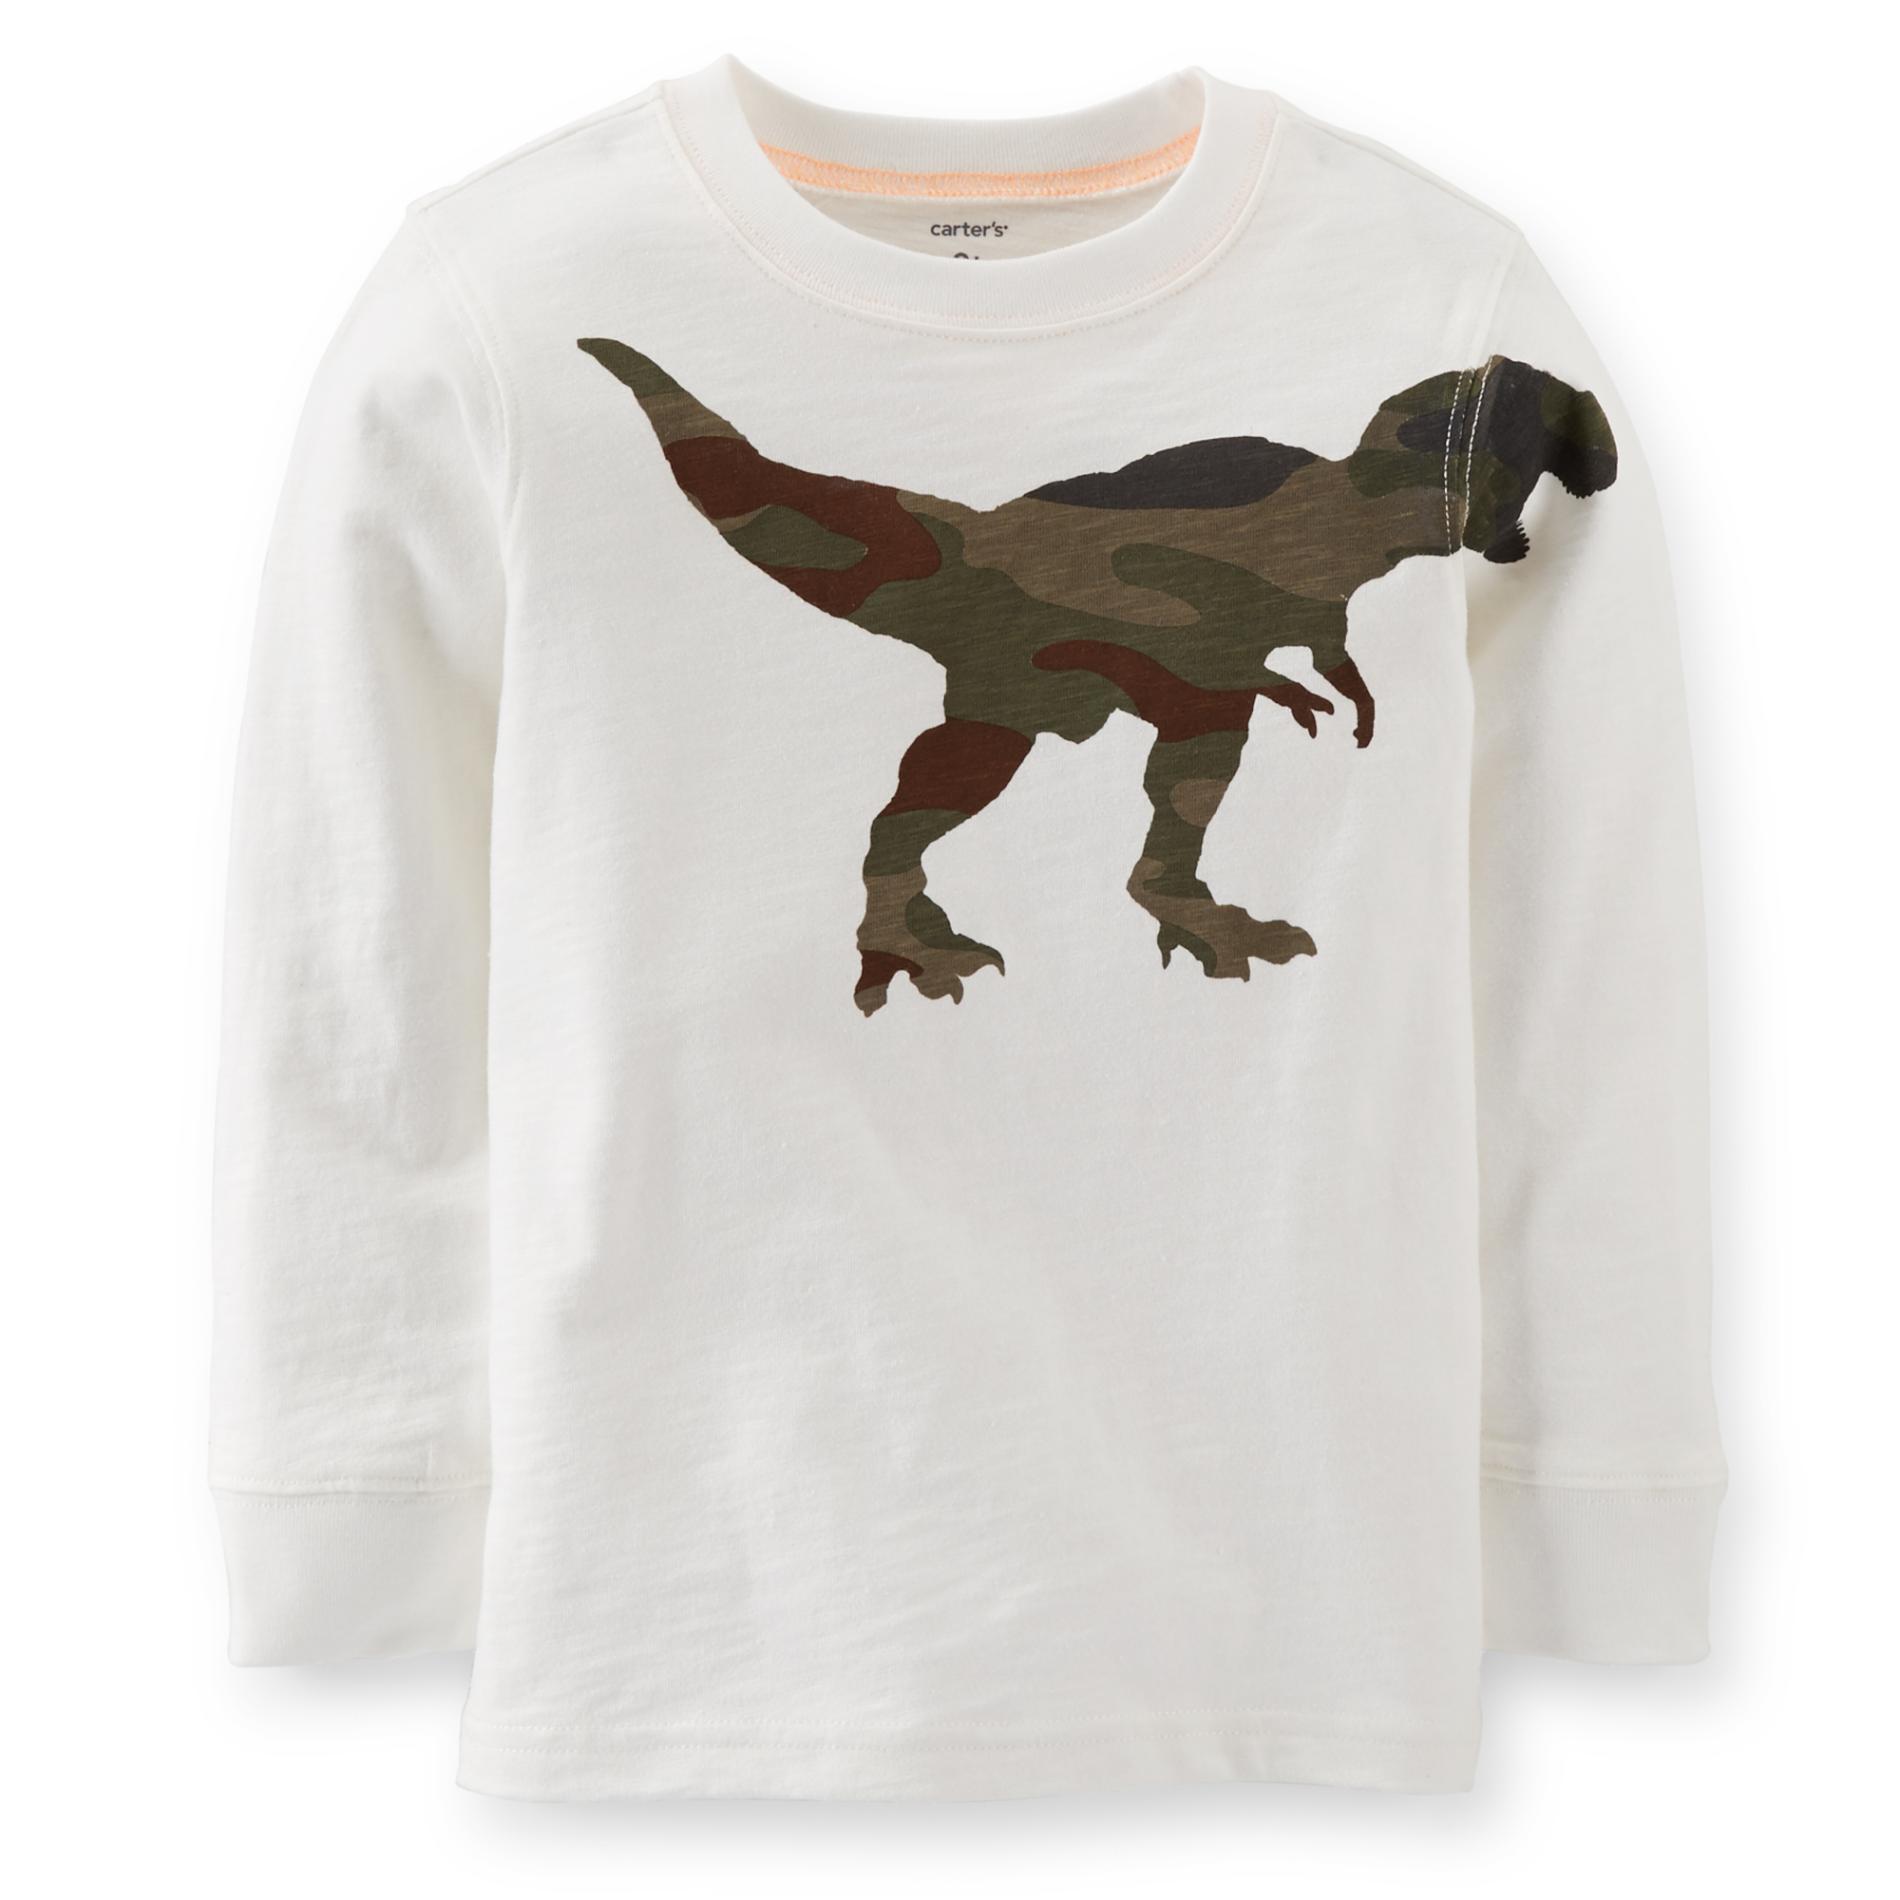 Carter's Boy's Graphic Sweatshirt - Camo Dinosaur